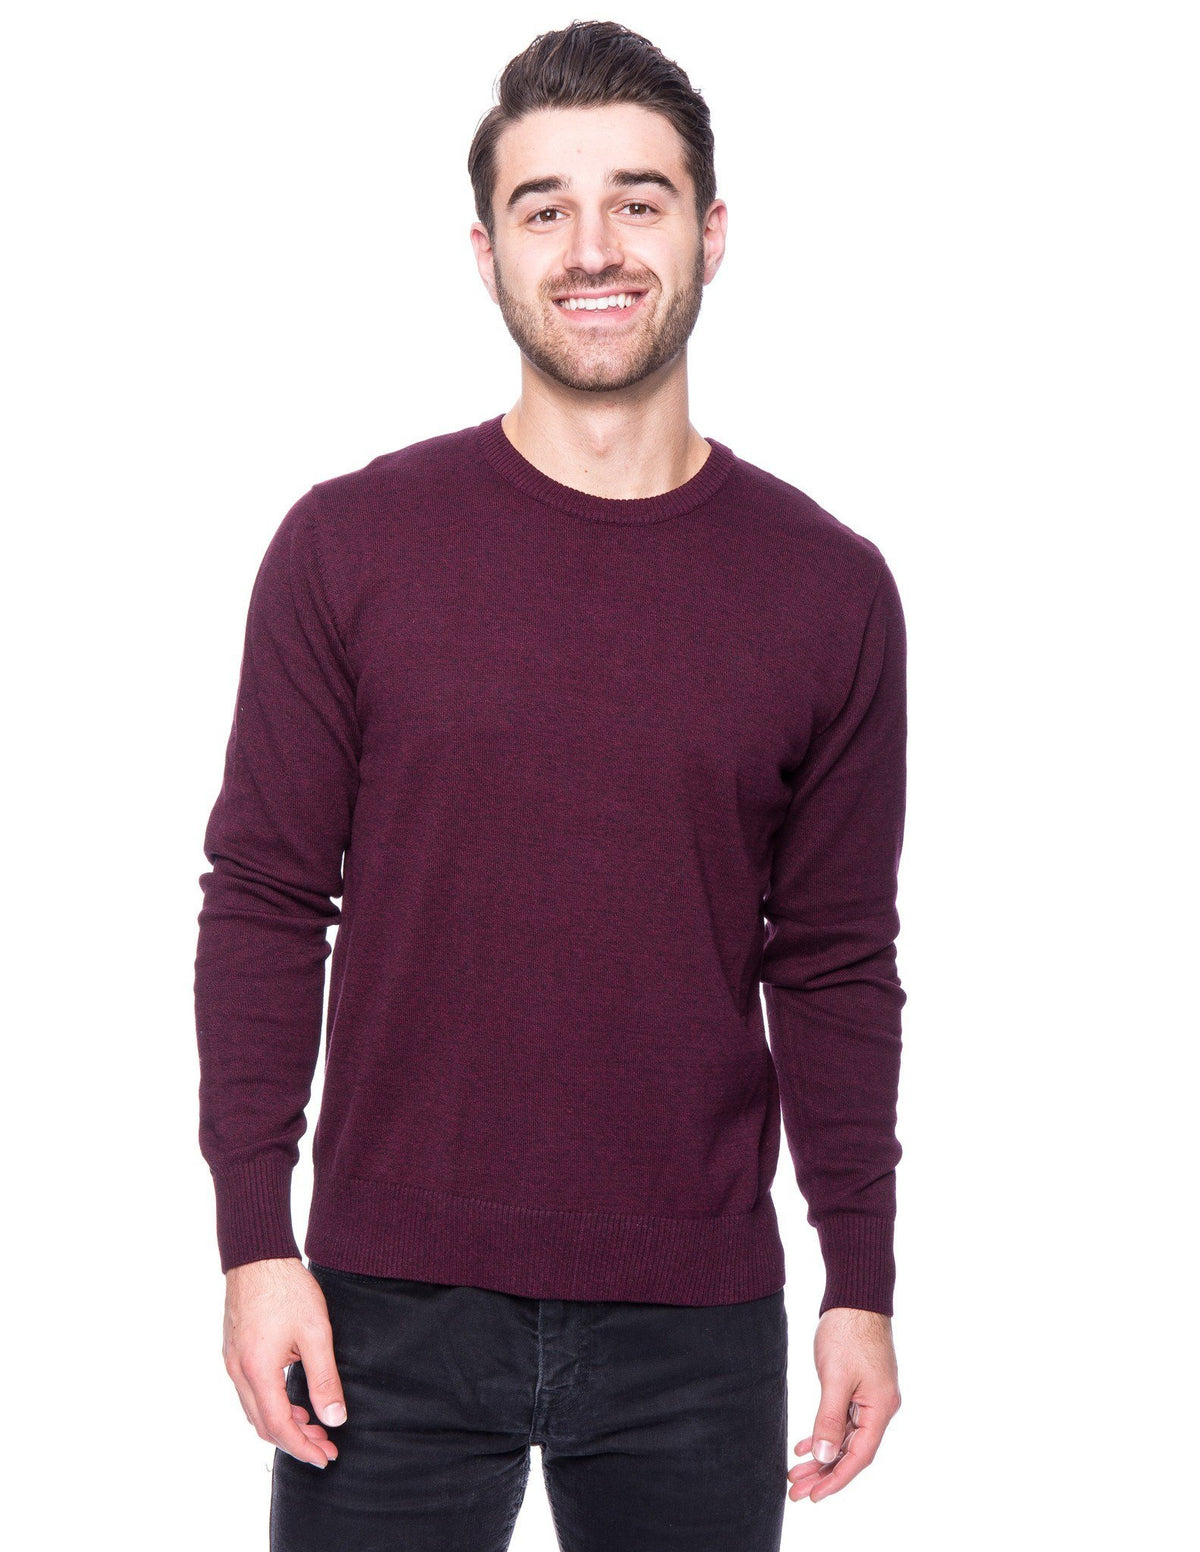 Men's 100% Cotton Crew Neck Sweater - Marl Purple/Black